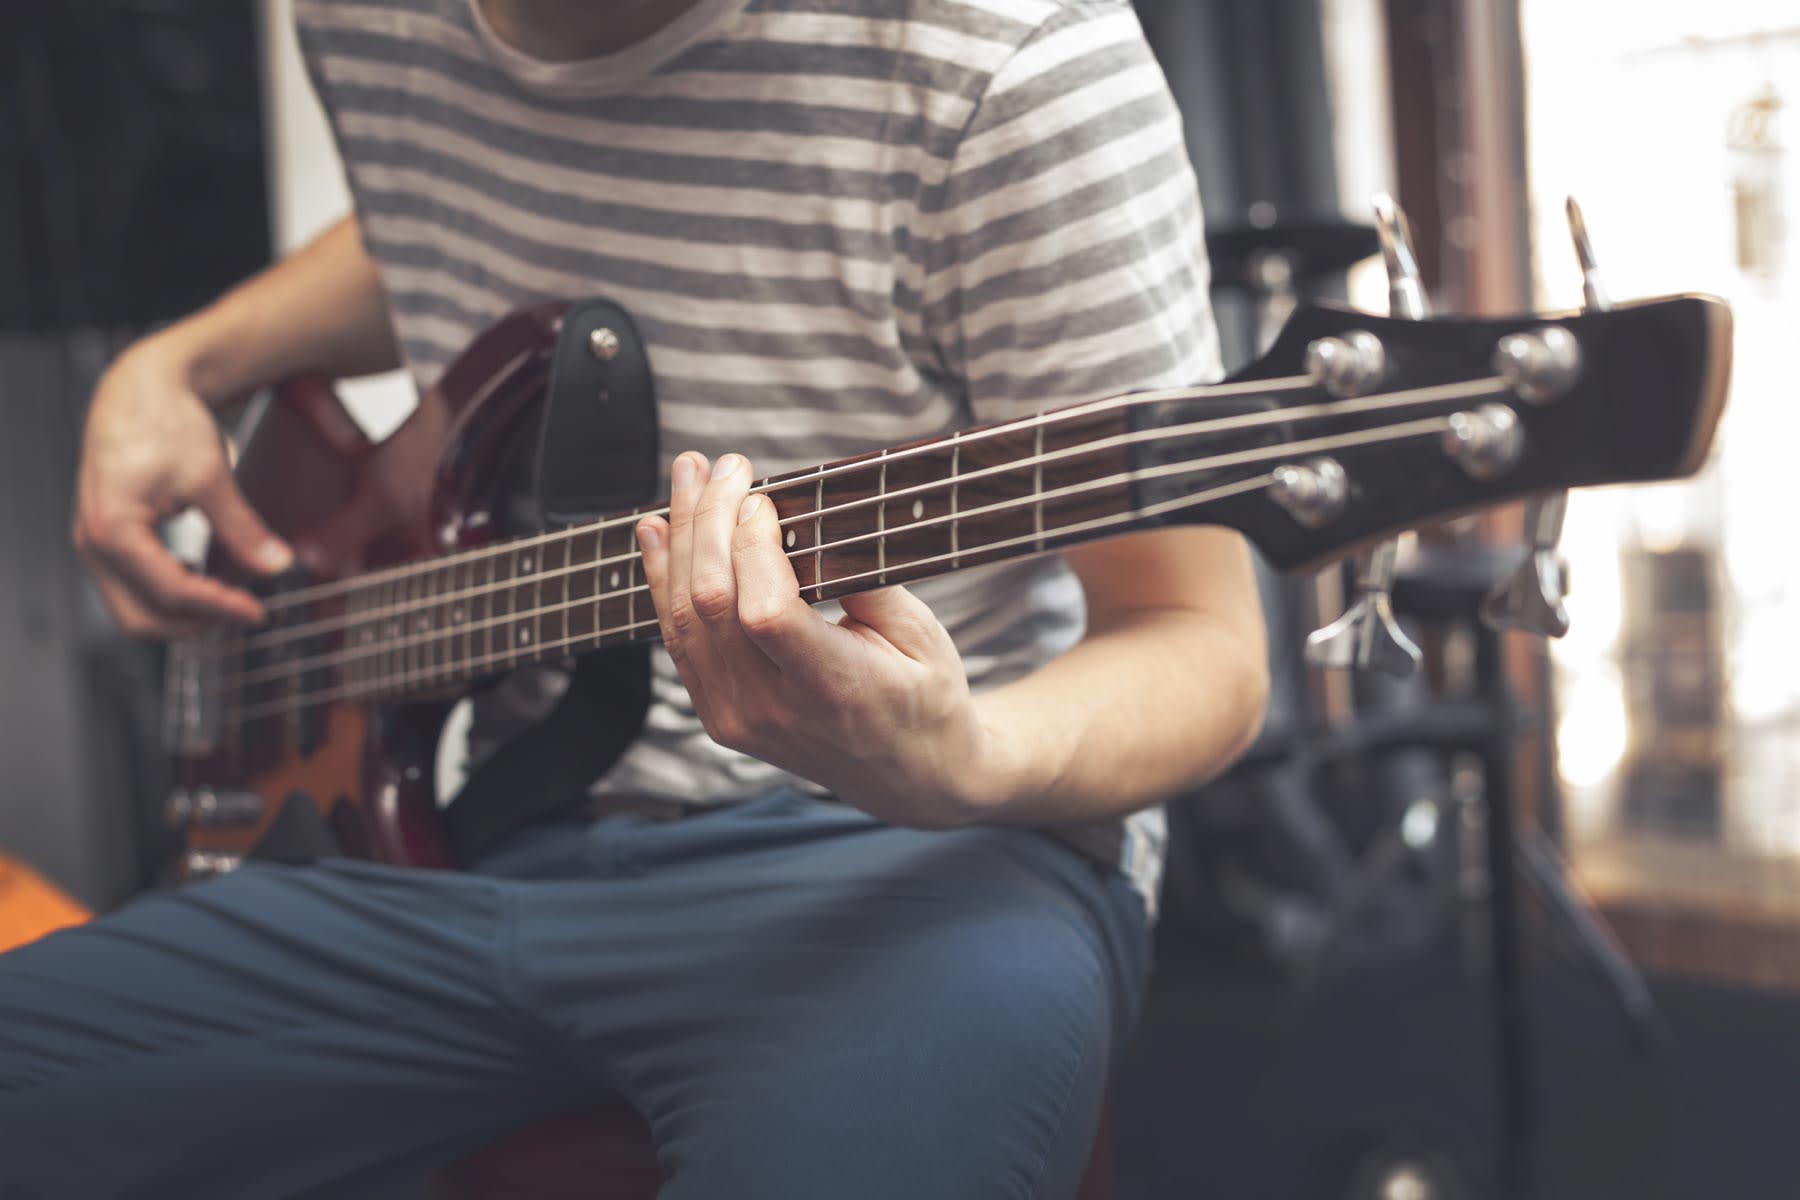 Find a bass guitar instructor near you